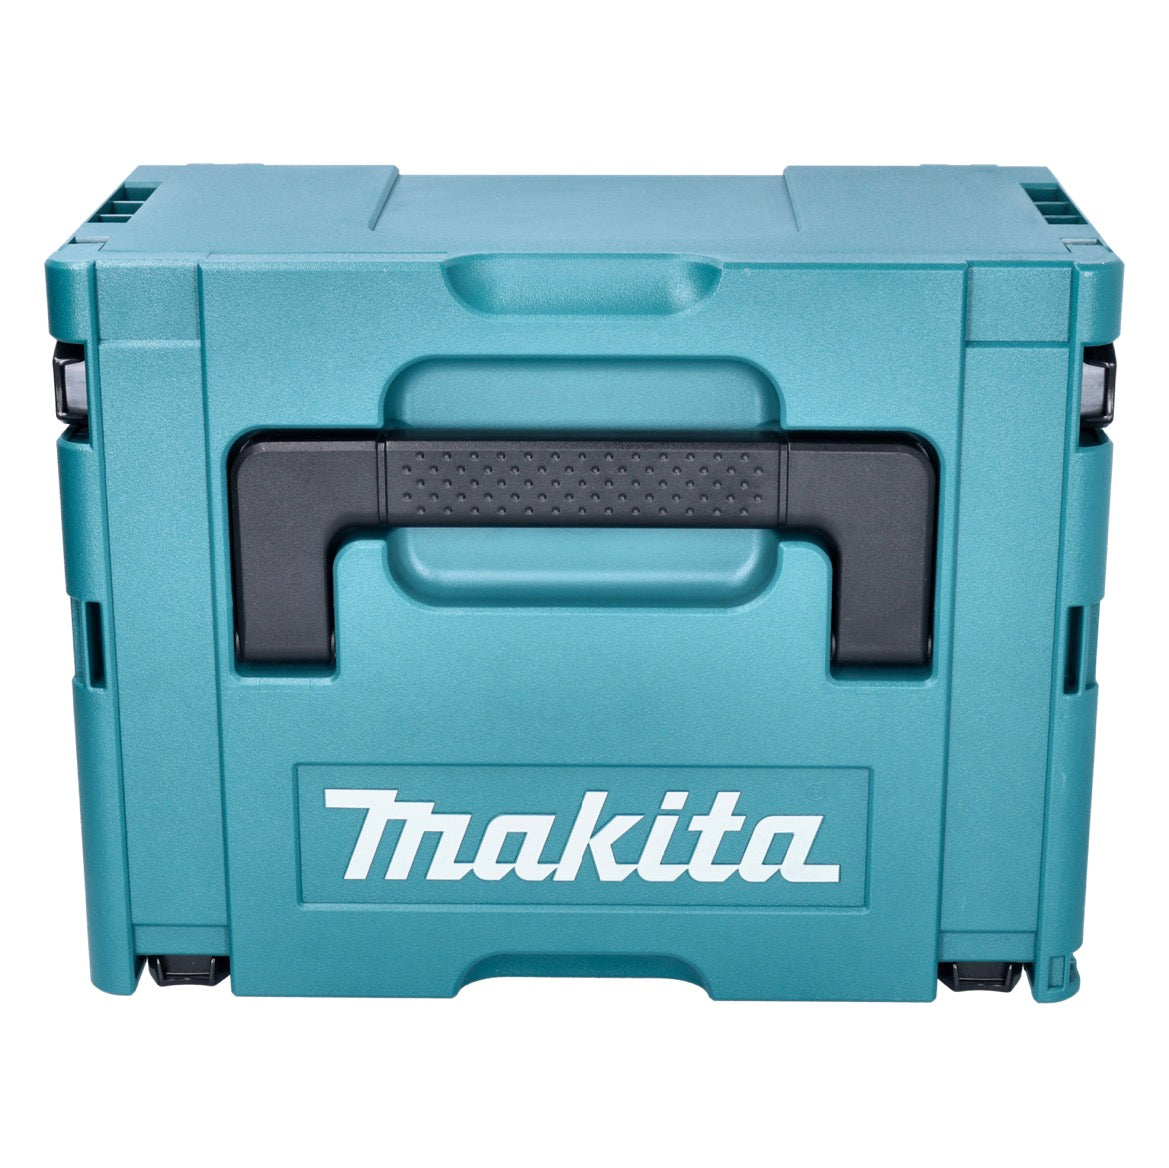 Makita DHR 183 ZJ Akku Bohrhammer 18 V 1,7 J SDS plus Brushless + Makpac - ohne Akku, ohne Ladegerät - Toolbrothers